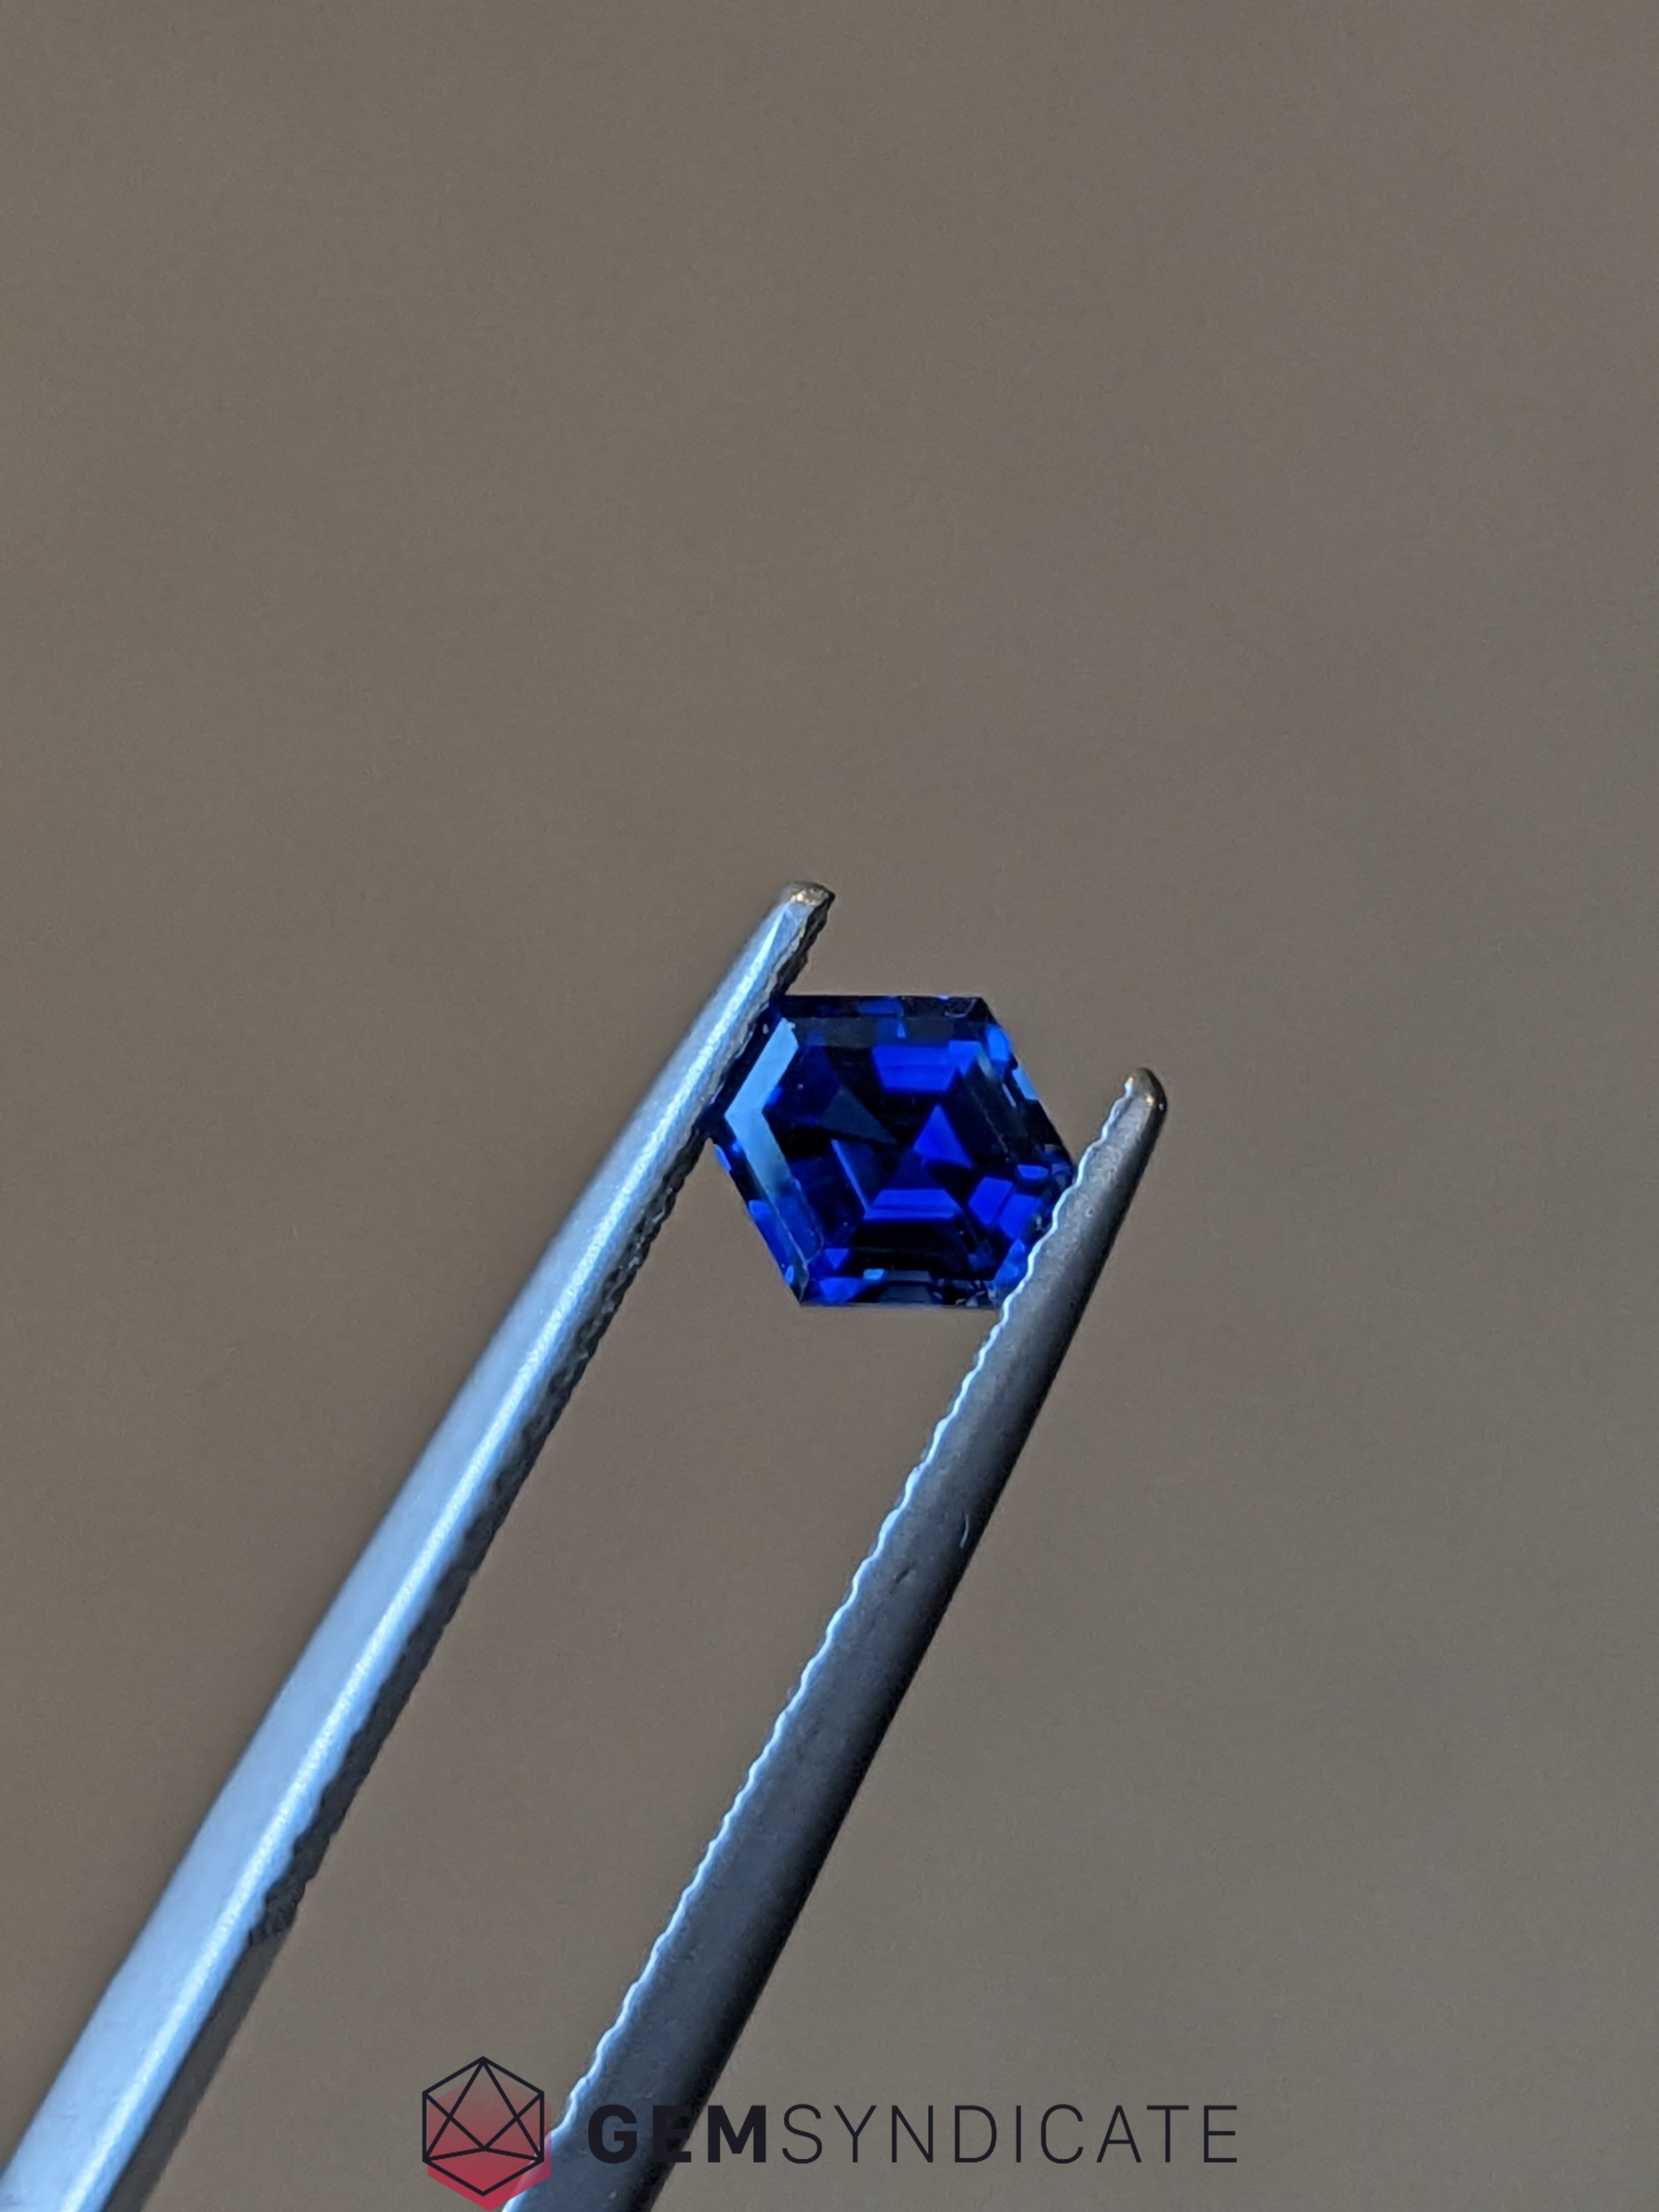 Stunning Elongated Hexagon Blue Sapphire 1.01ct